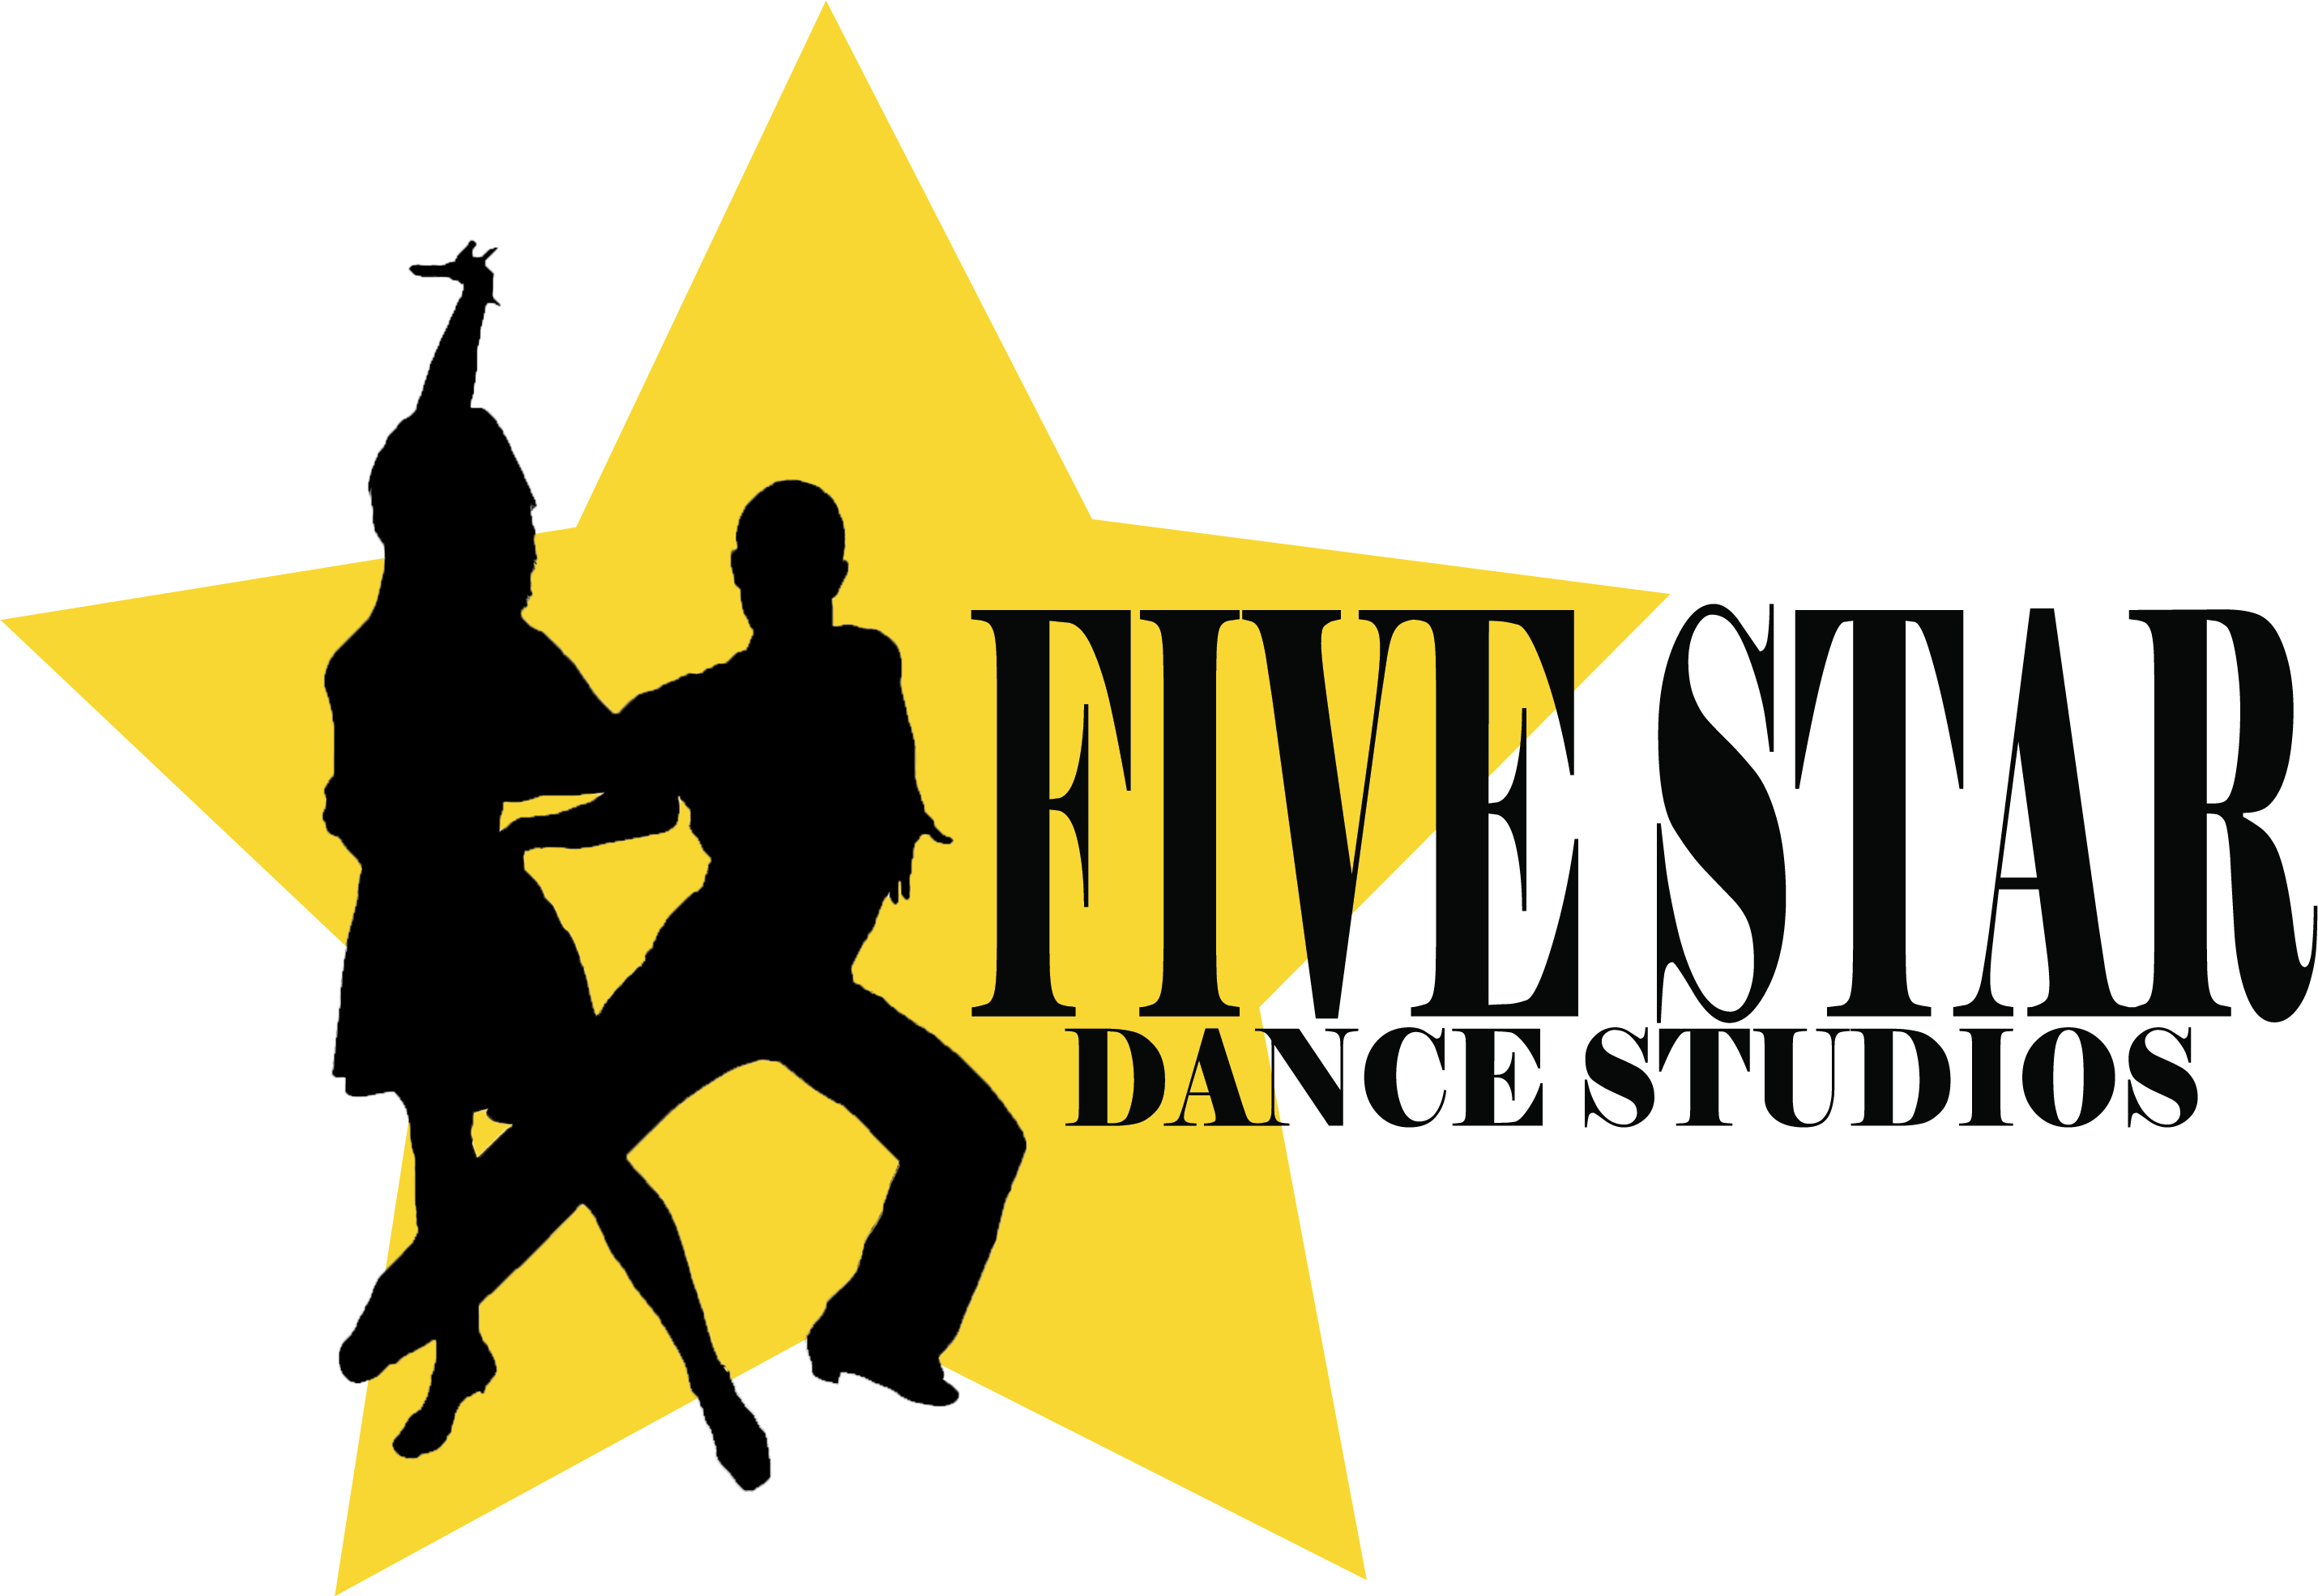 5 Star Dance Studios - Various Artists / Salsa Hits, Vol. 3 (2885x2885)